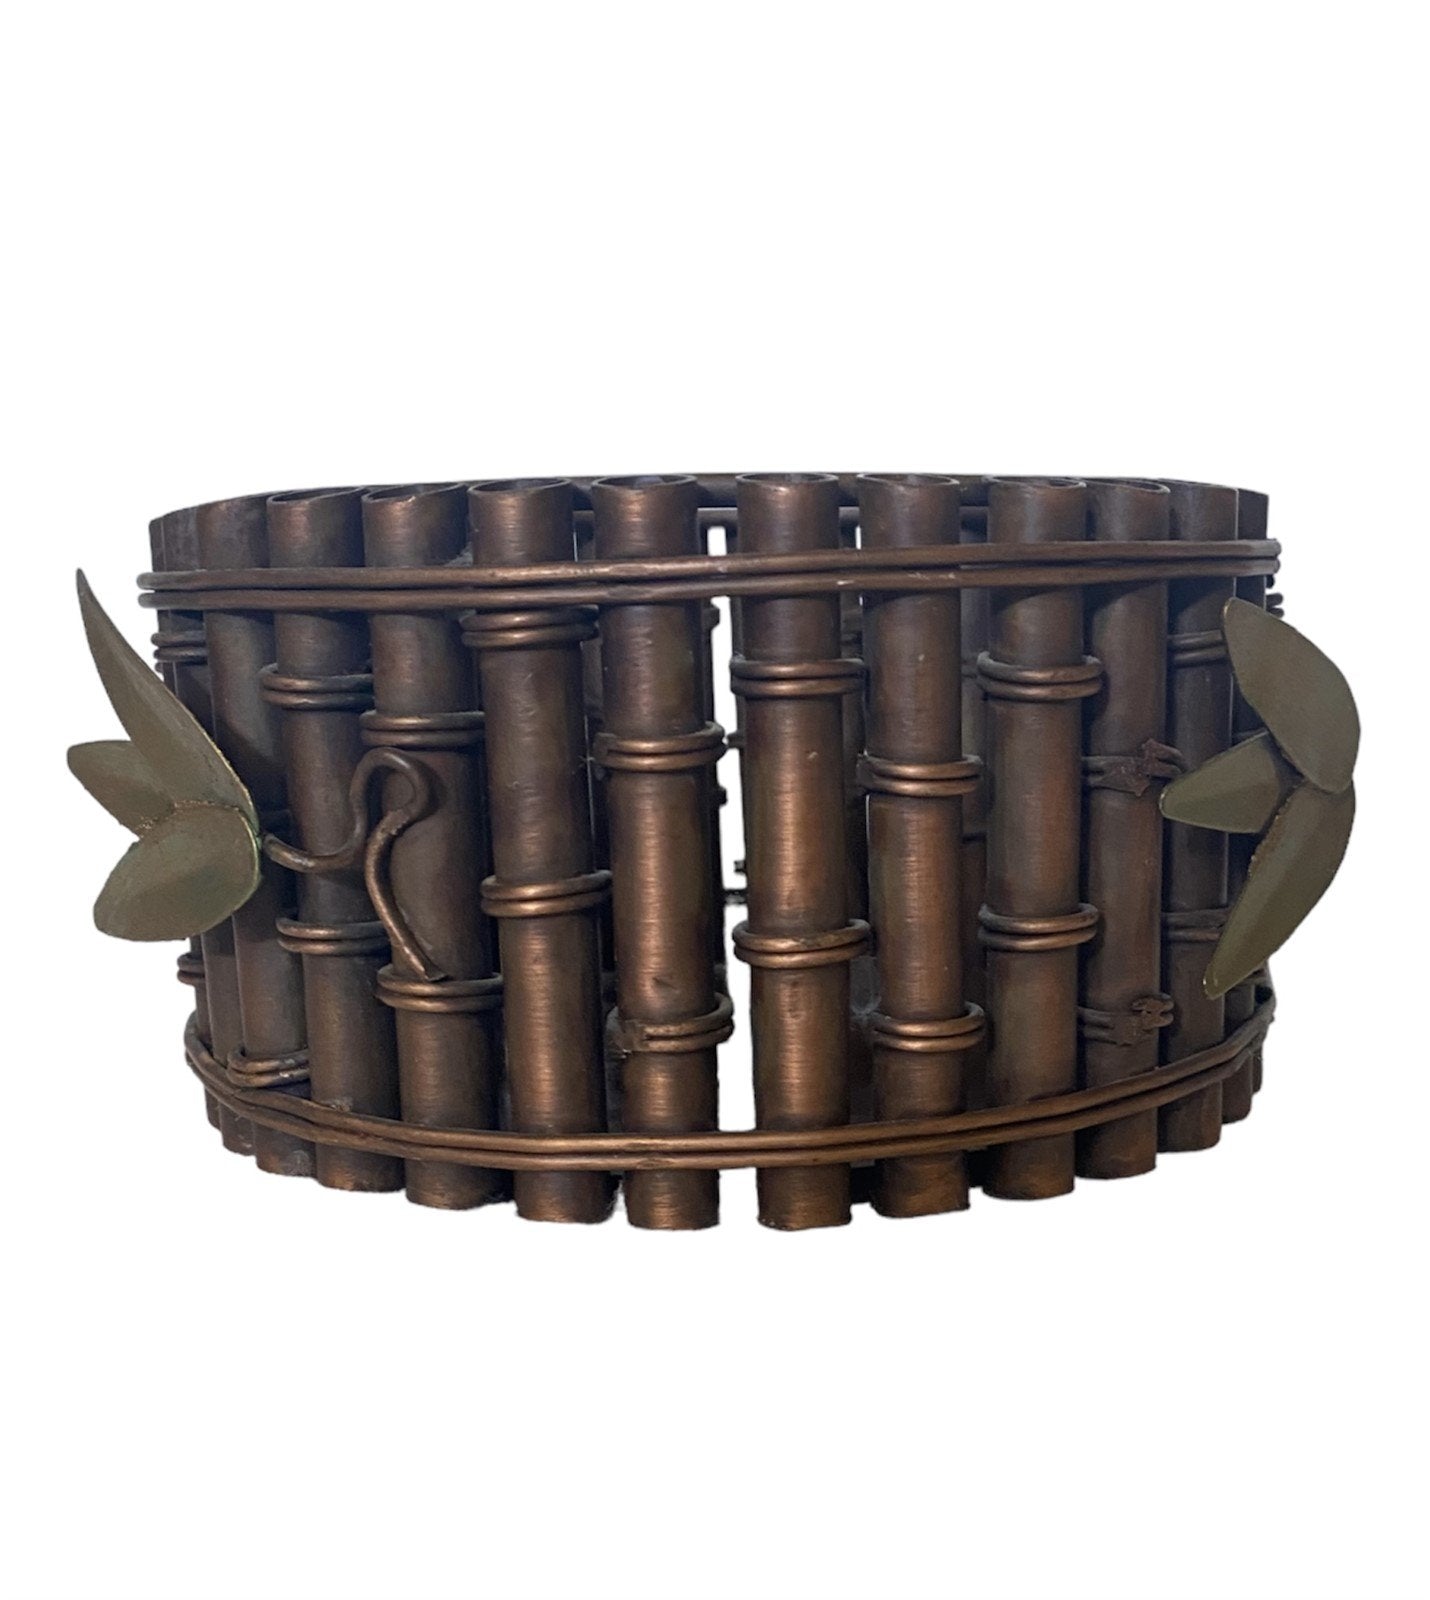 Shendan Heavy Metal Jewelry Box, Bamboo Shaped, Round